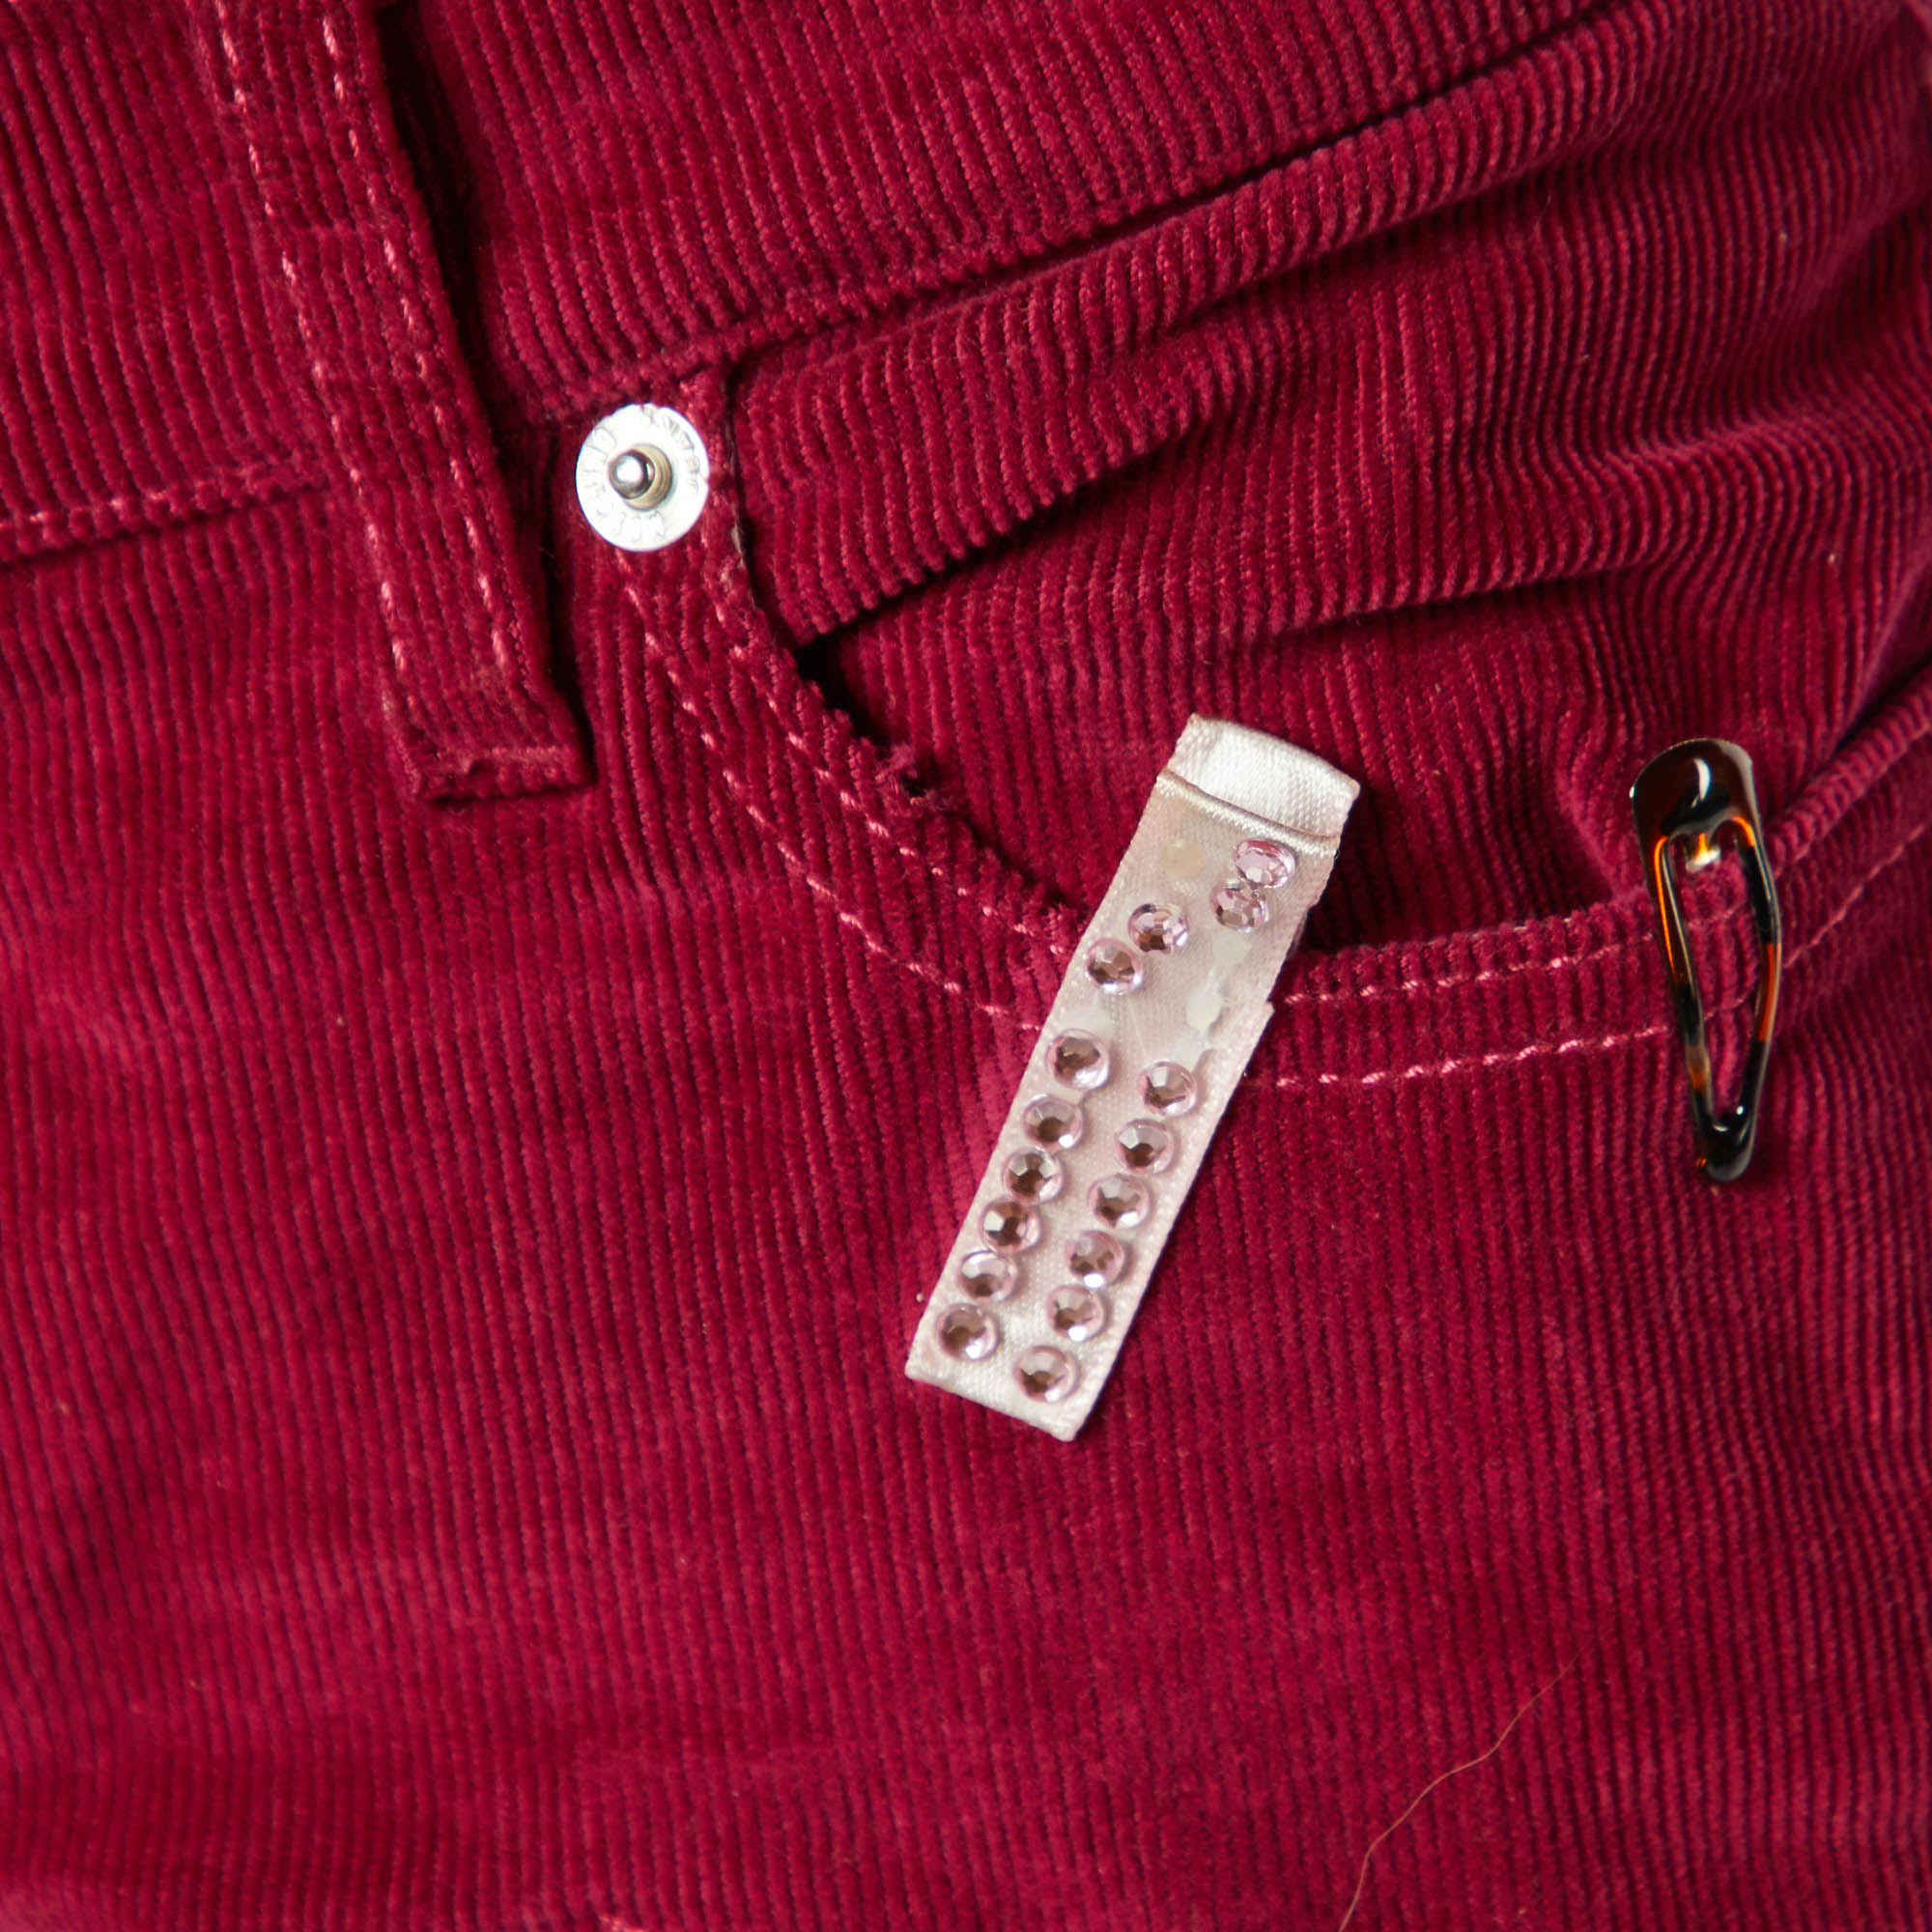 Moschino Jeans Magenta Clips Detail Cotton Knit Cardigan & Corduroy Capri Pants M